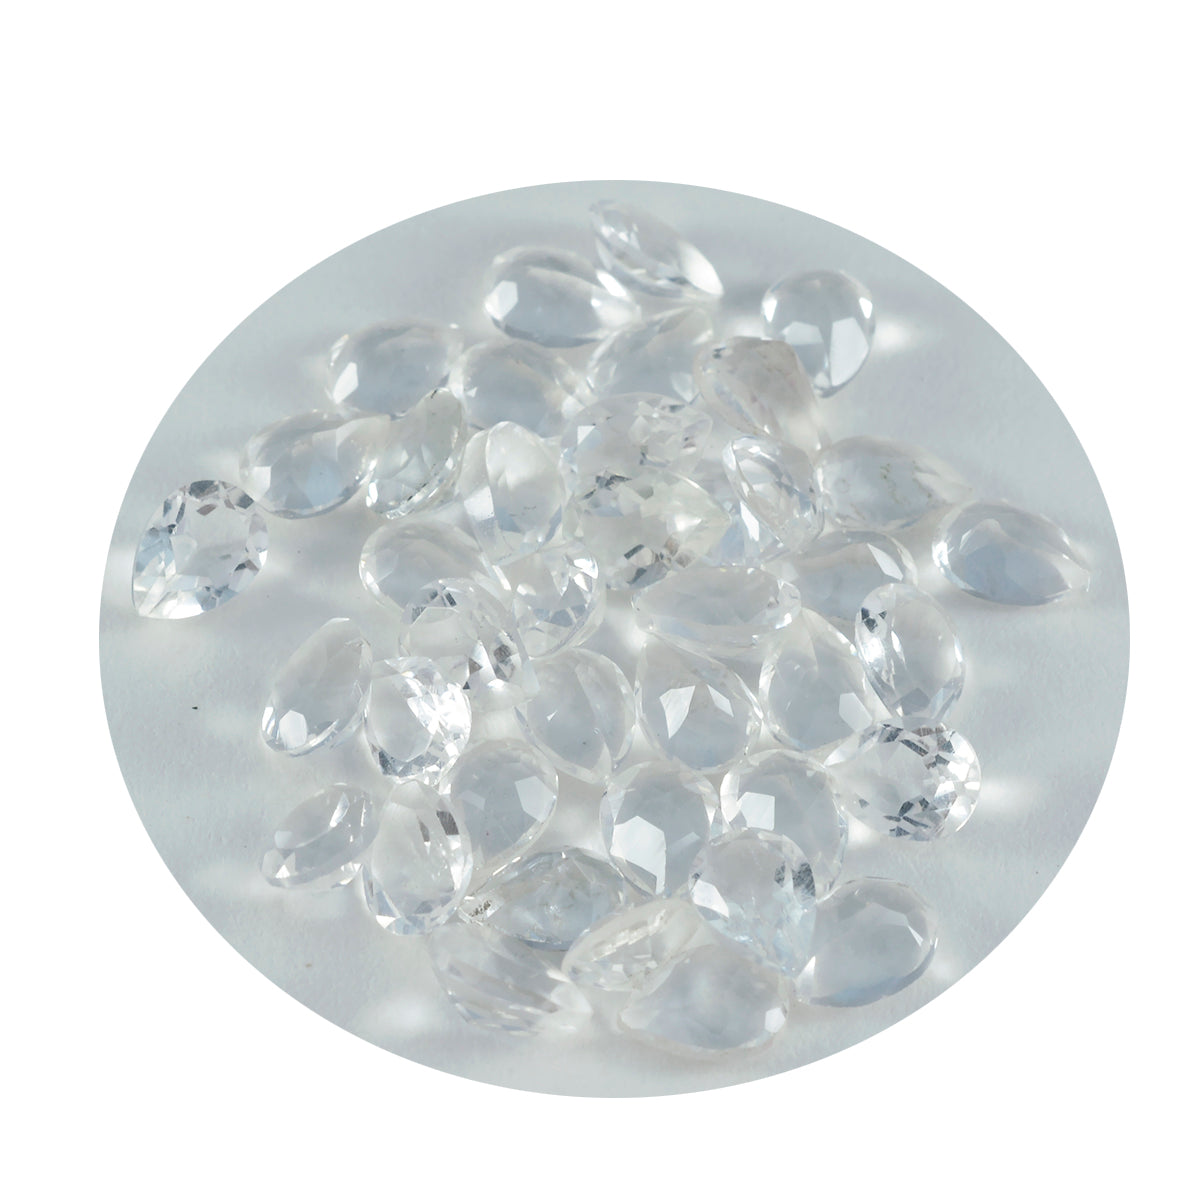 Riyogems 1PC White Crystal Quartz Faceted 4x6 mm Pear Shape handsome Quality Gem